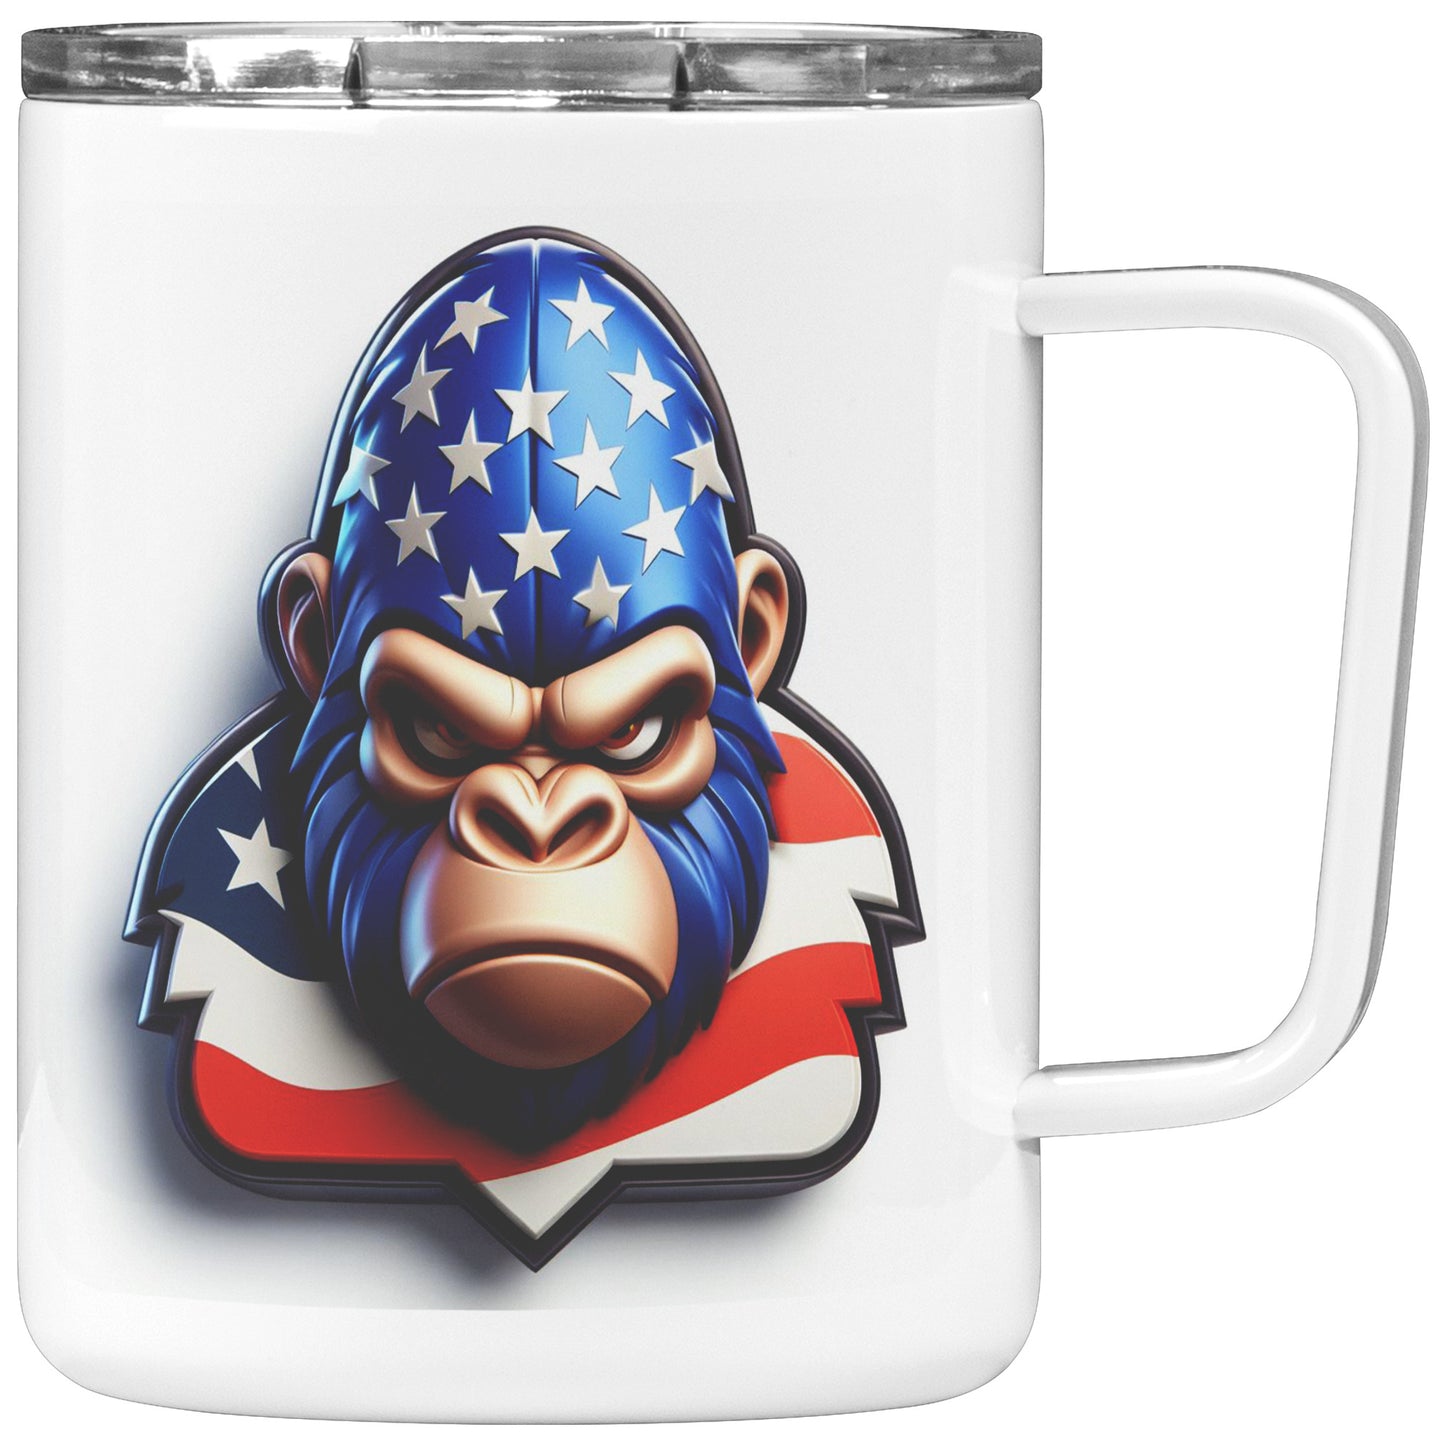 Grumpy Gorilla - Insulated Coffee Mug #2